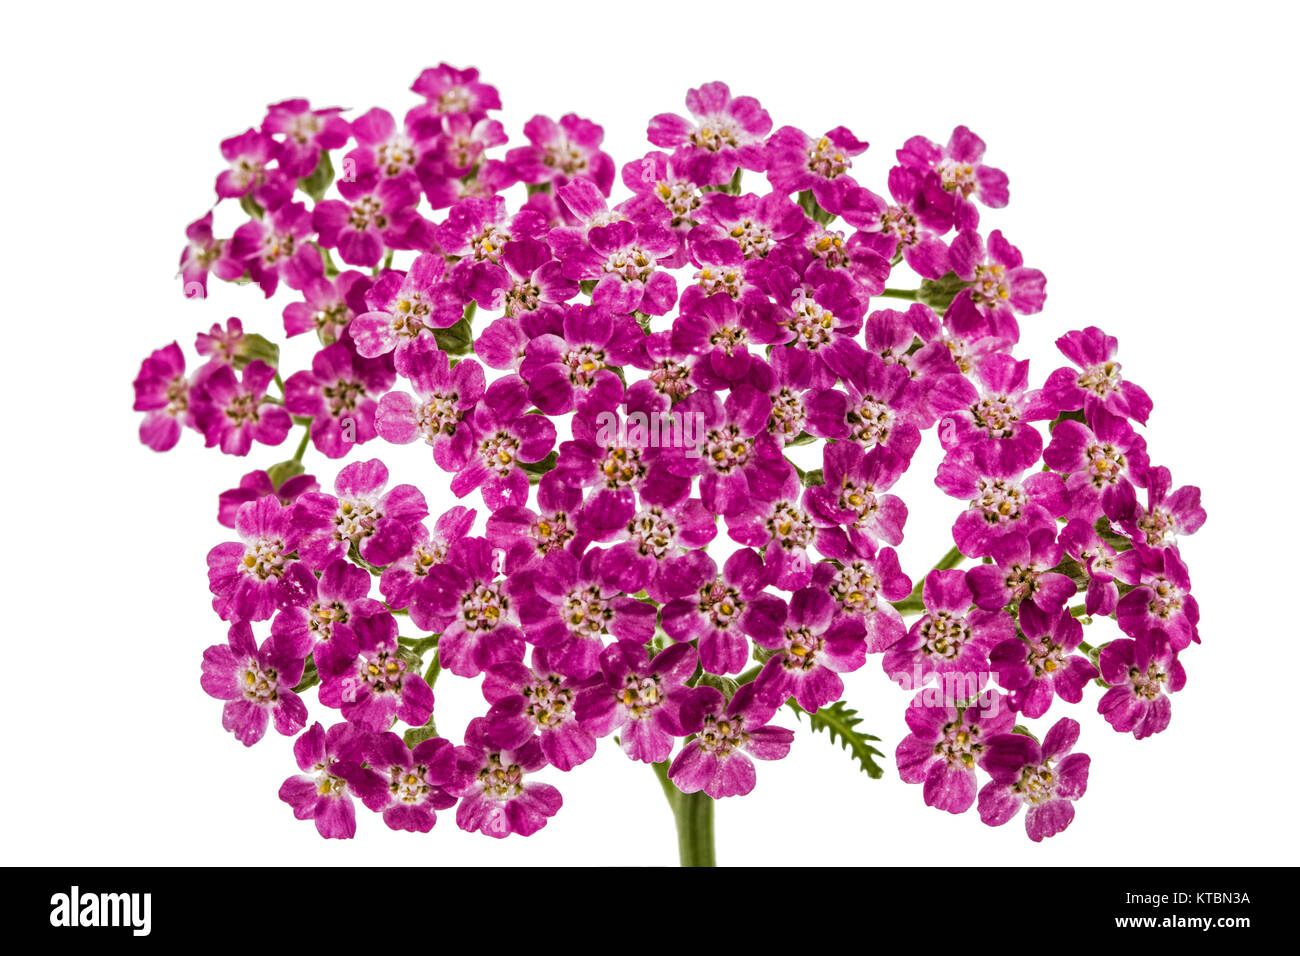 Flowers of yarrow, lat. Achillea millefolium, isolated on white background Stock Photo